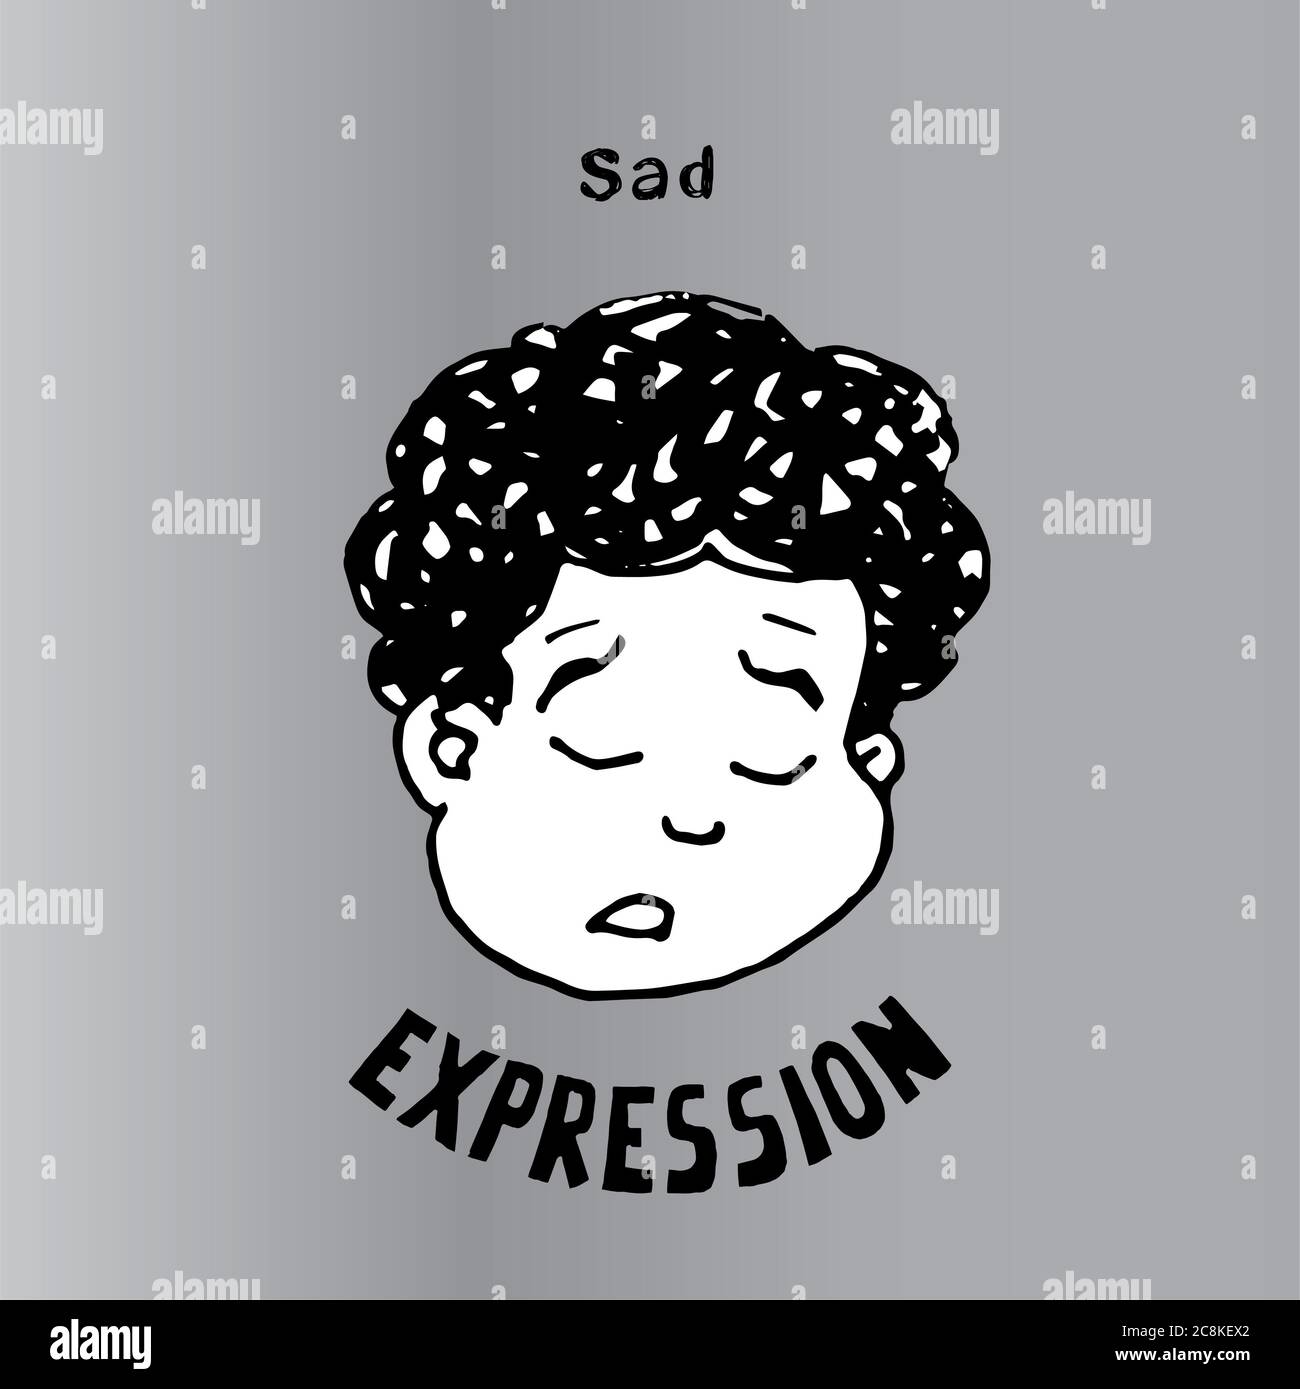 Sad face vector illustration. Interesting Cartoon character of sad kid. Used as emoticons and emojis. Stock Photo